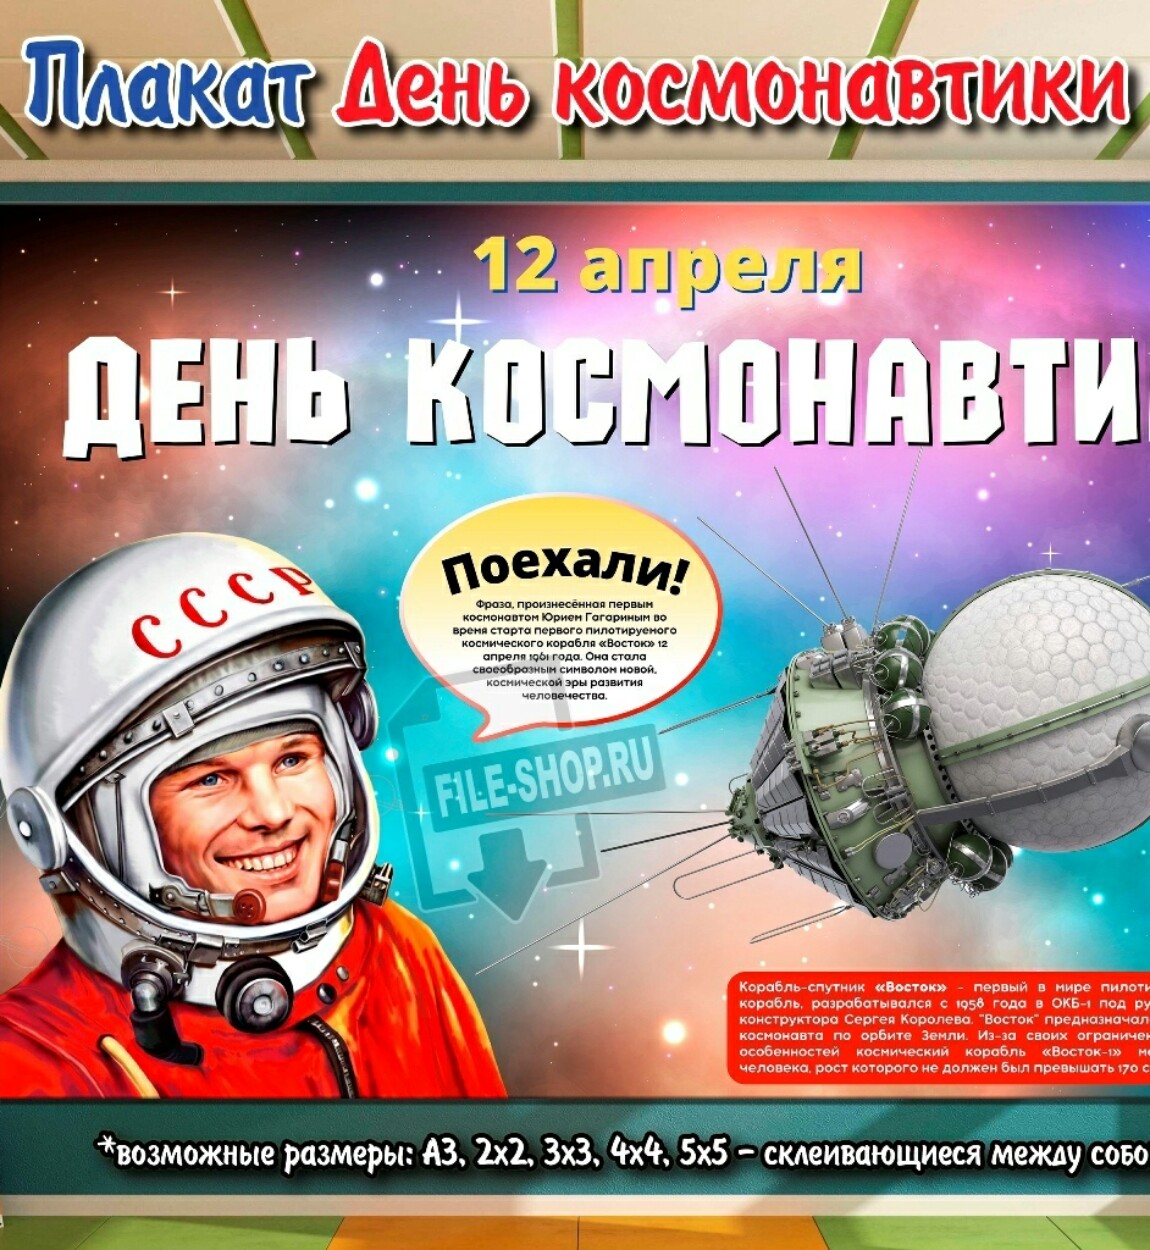 Плакат на 12 апреля. Плакат "день космонавтики". День космонавтики Плакаи. 12 Апреля день космонавтики плакат.